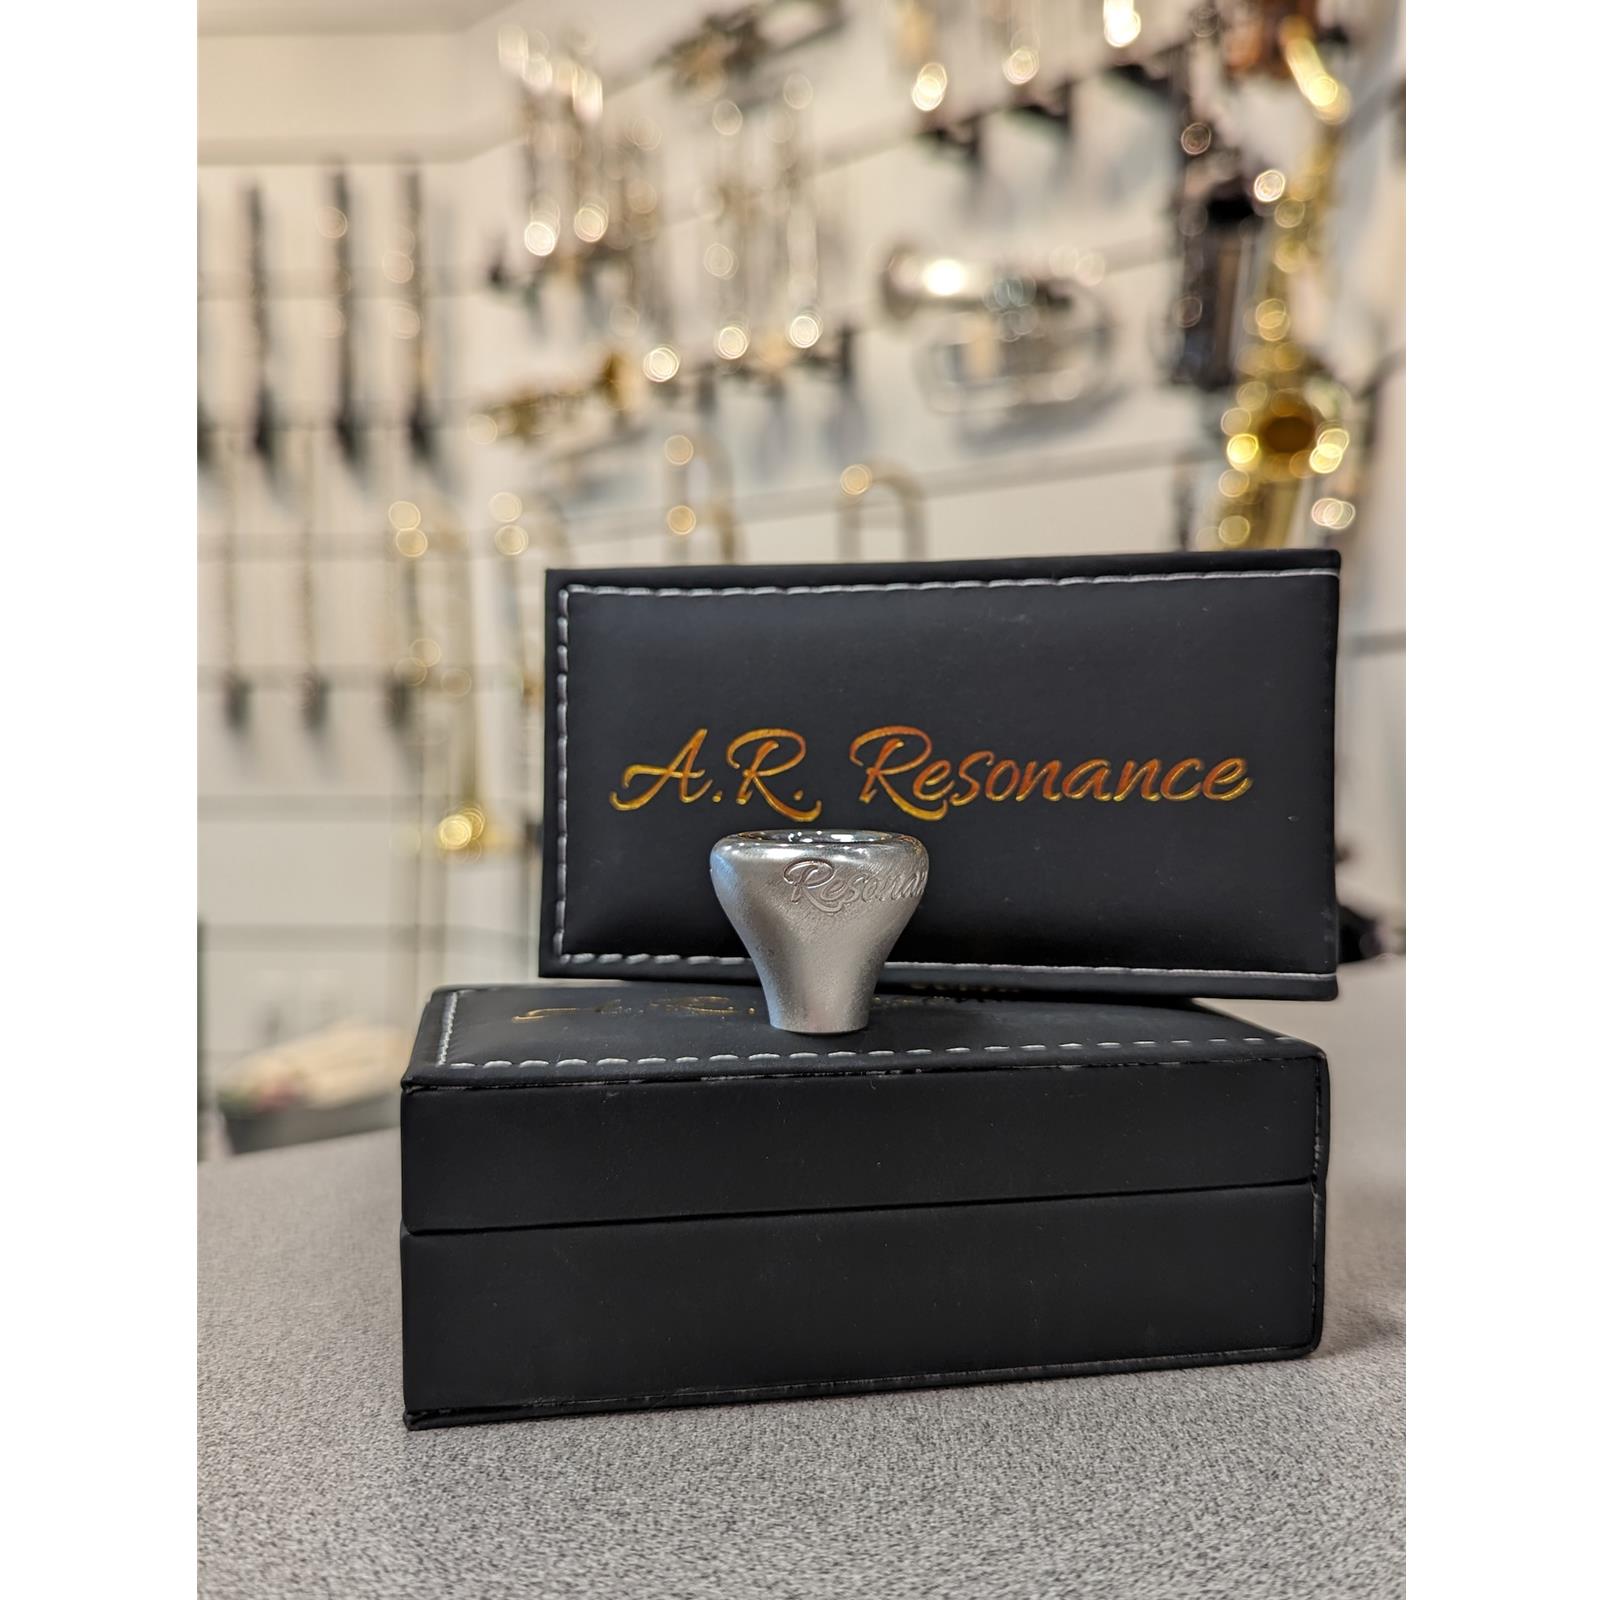 AR Resonance Trumpet Cup ME 40 Silver